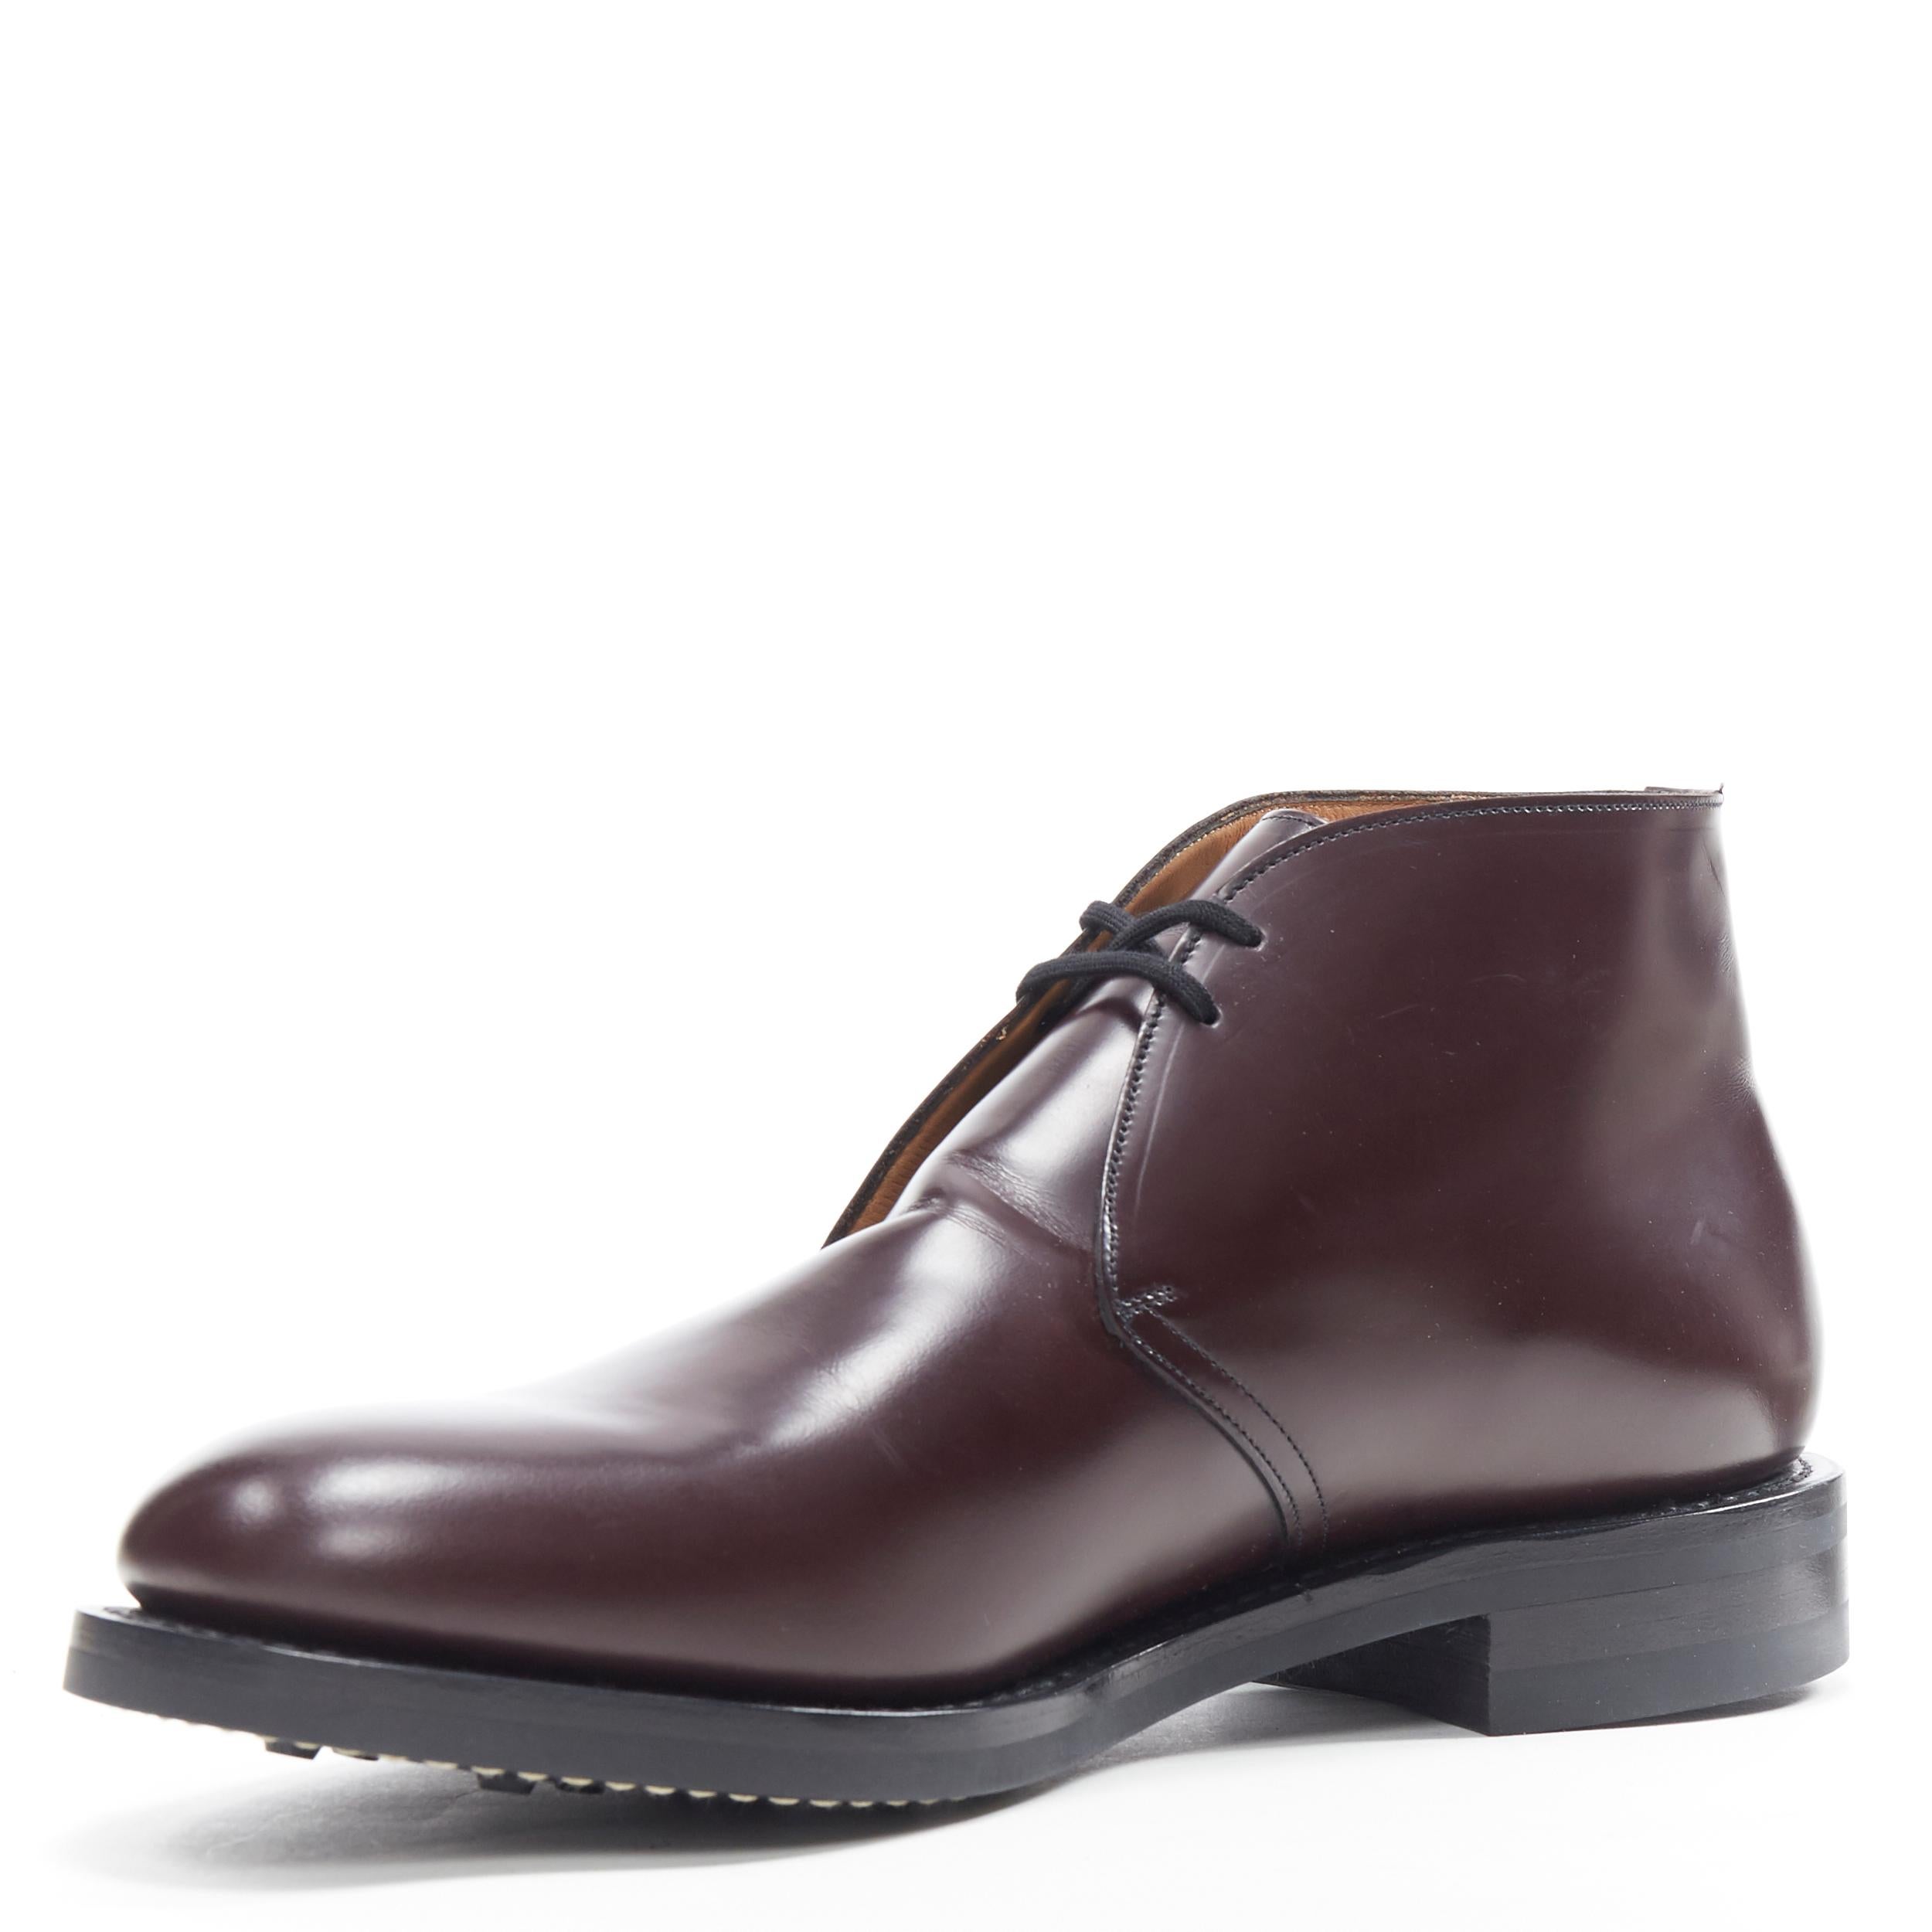 Black new CHURCHS Ryder 3 Burgundy Bright Calf polished leather chukka boots UK11 US12